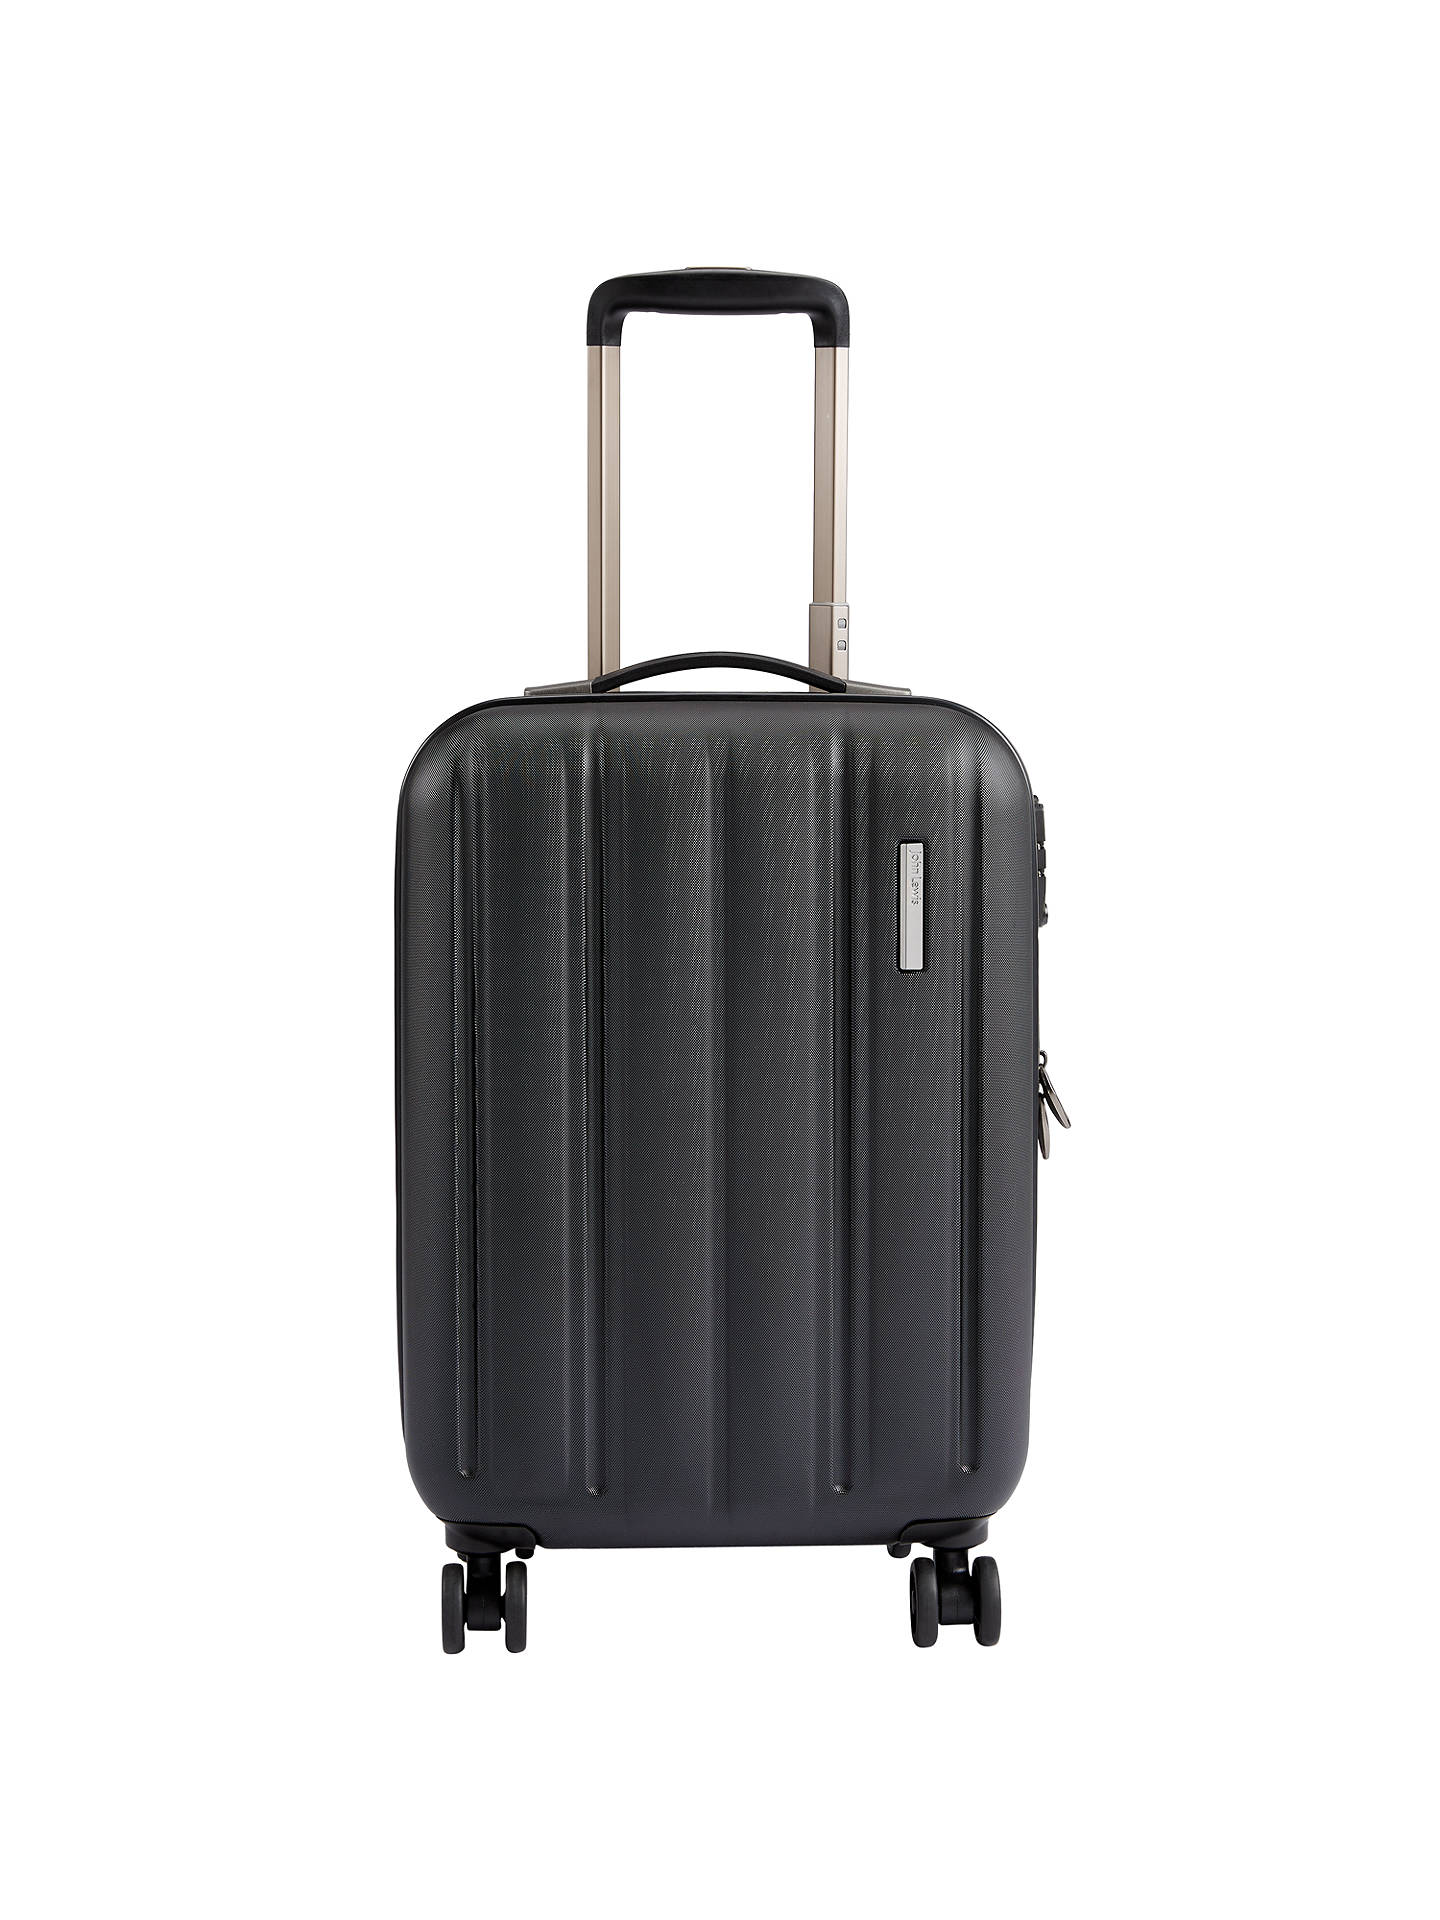 John Lewis & Partners Munich 4 Wheel 55cm Cabin Suitcase, Black at John Lewis & Partners